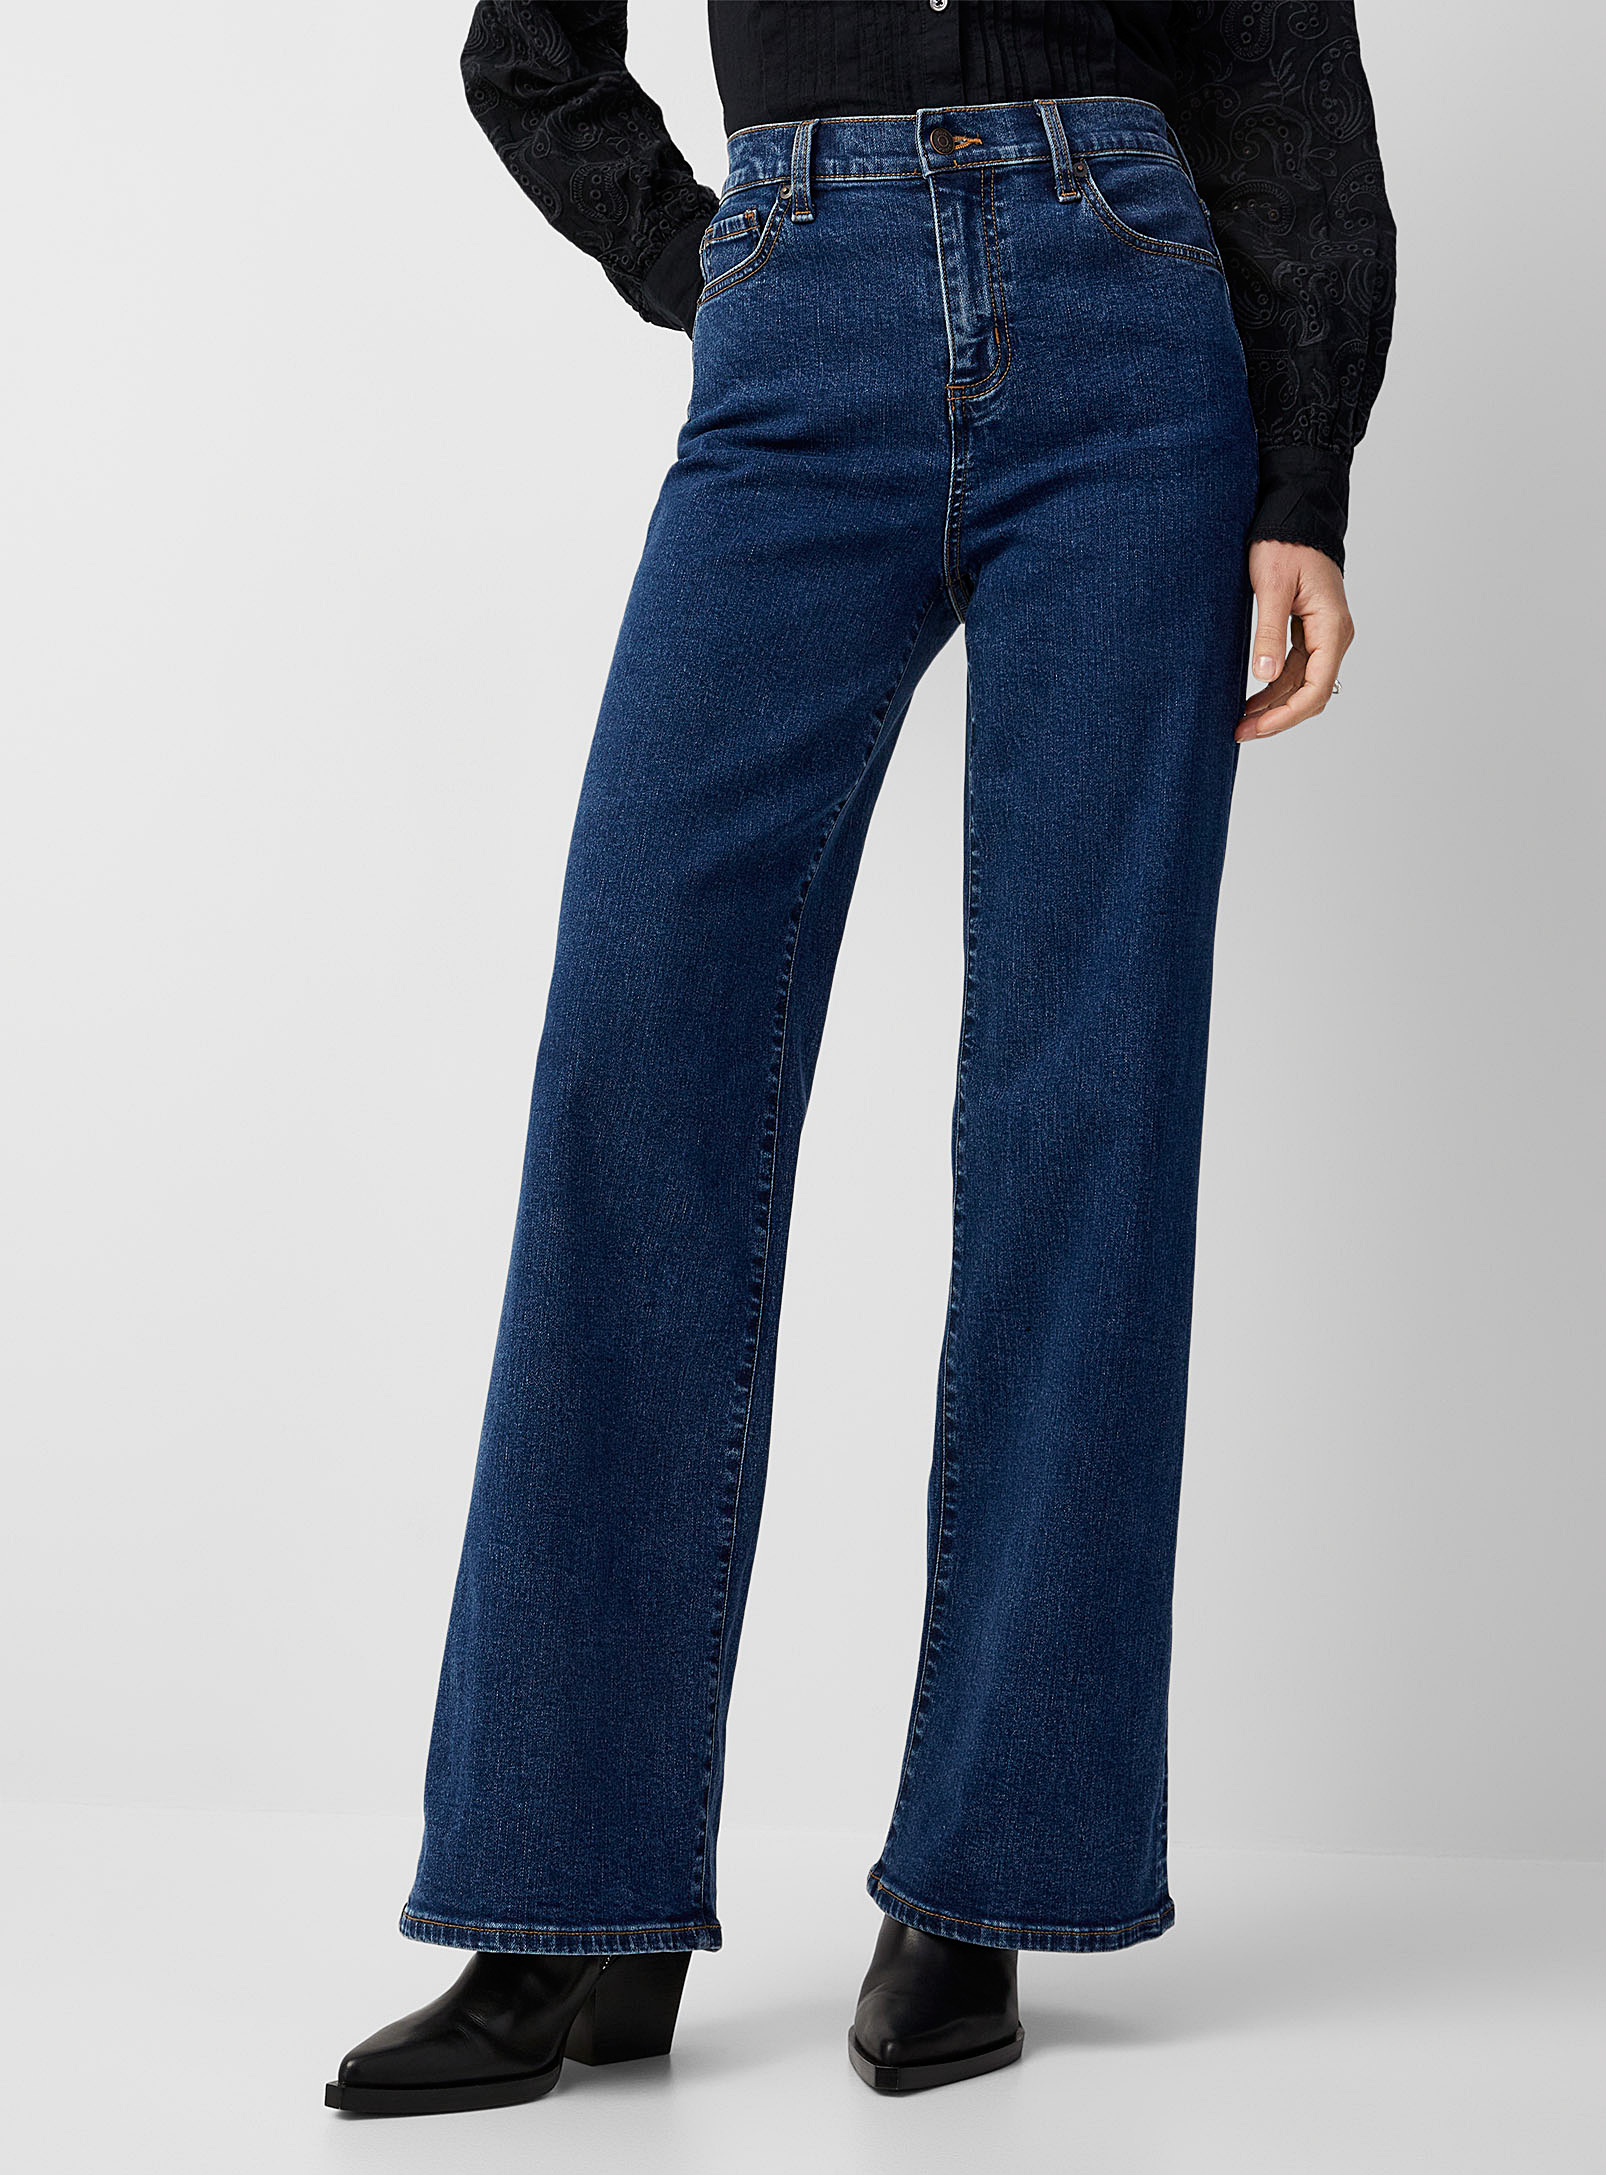 Yoga Jeans - Le jean large indigo moyen